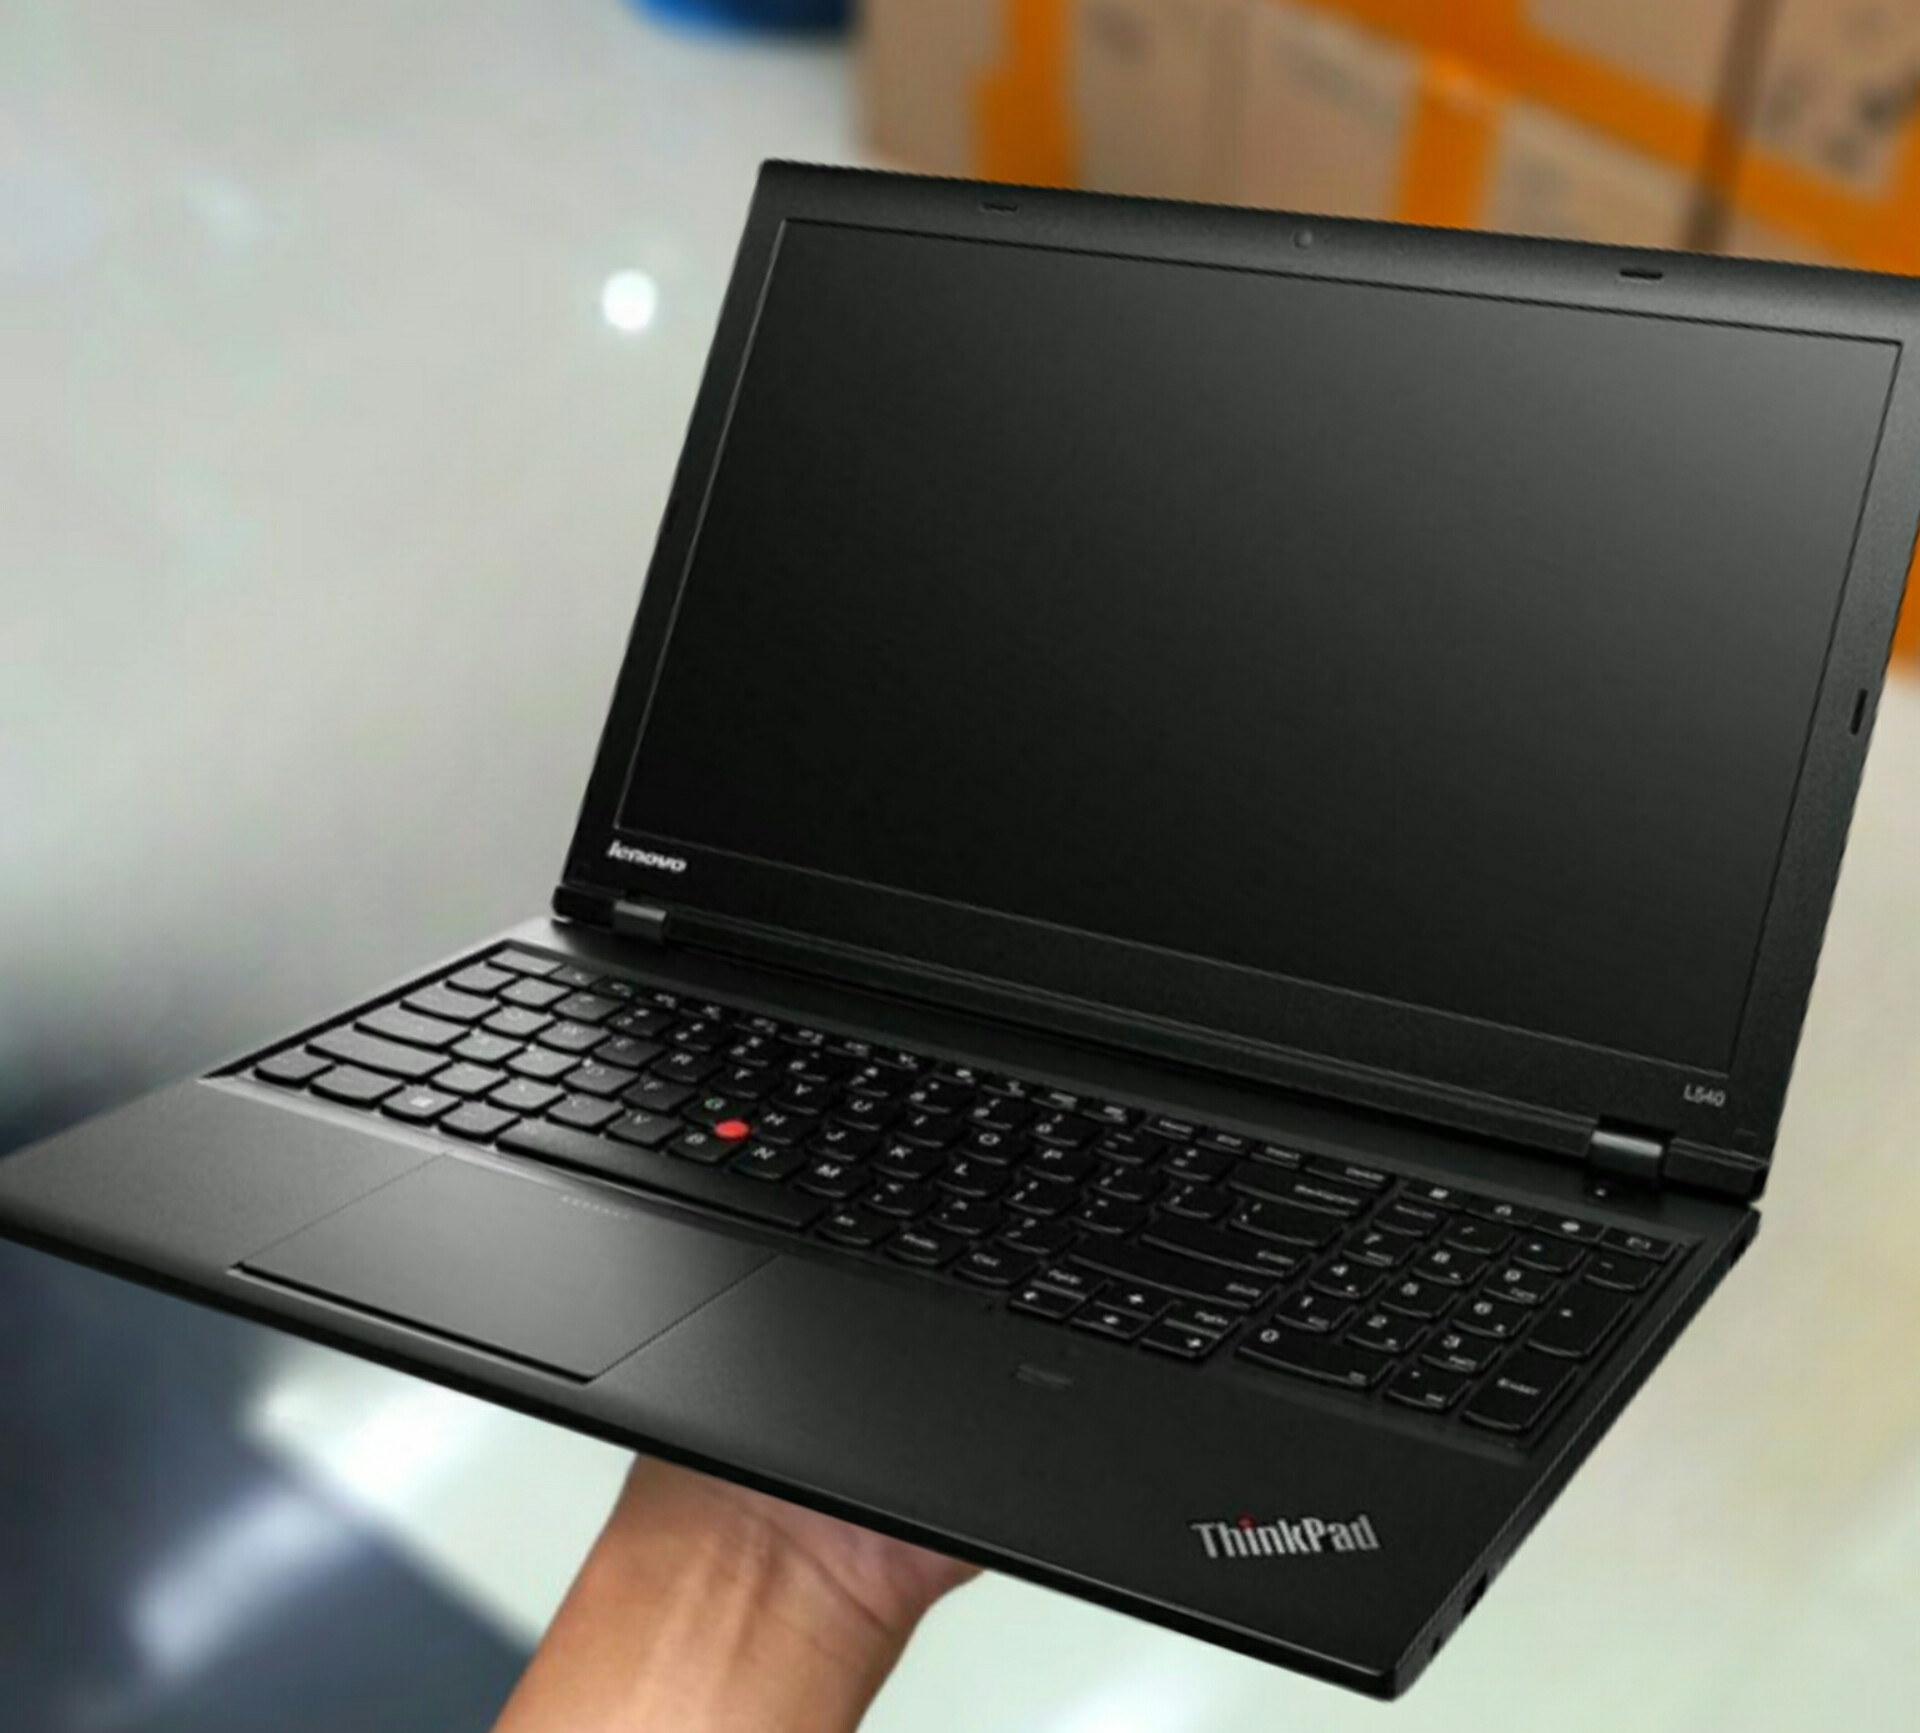 Lenovo ThinkPad L540 Laptop Price in Pakistan